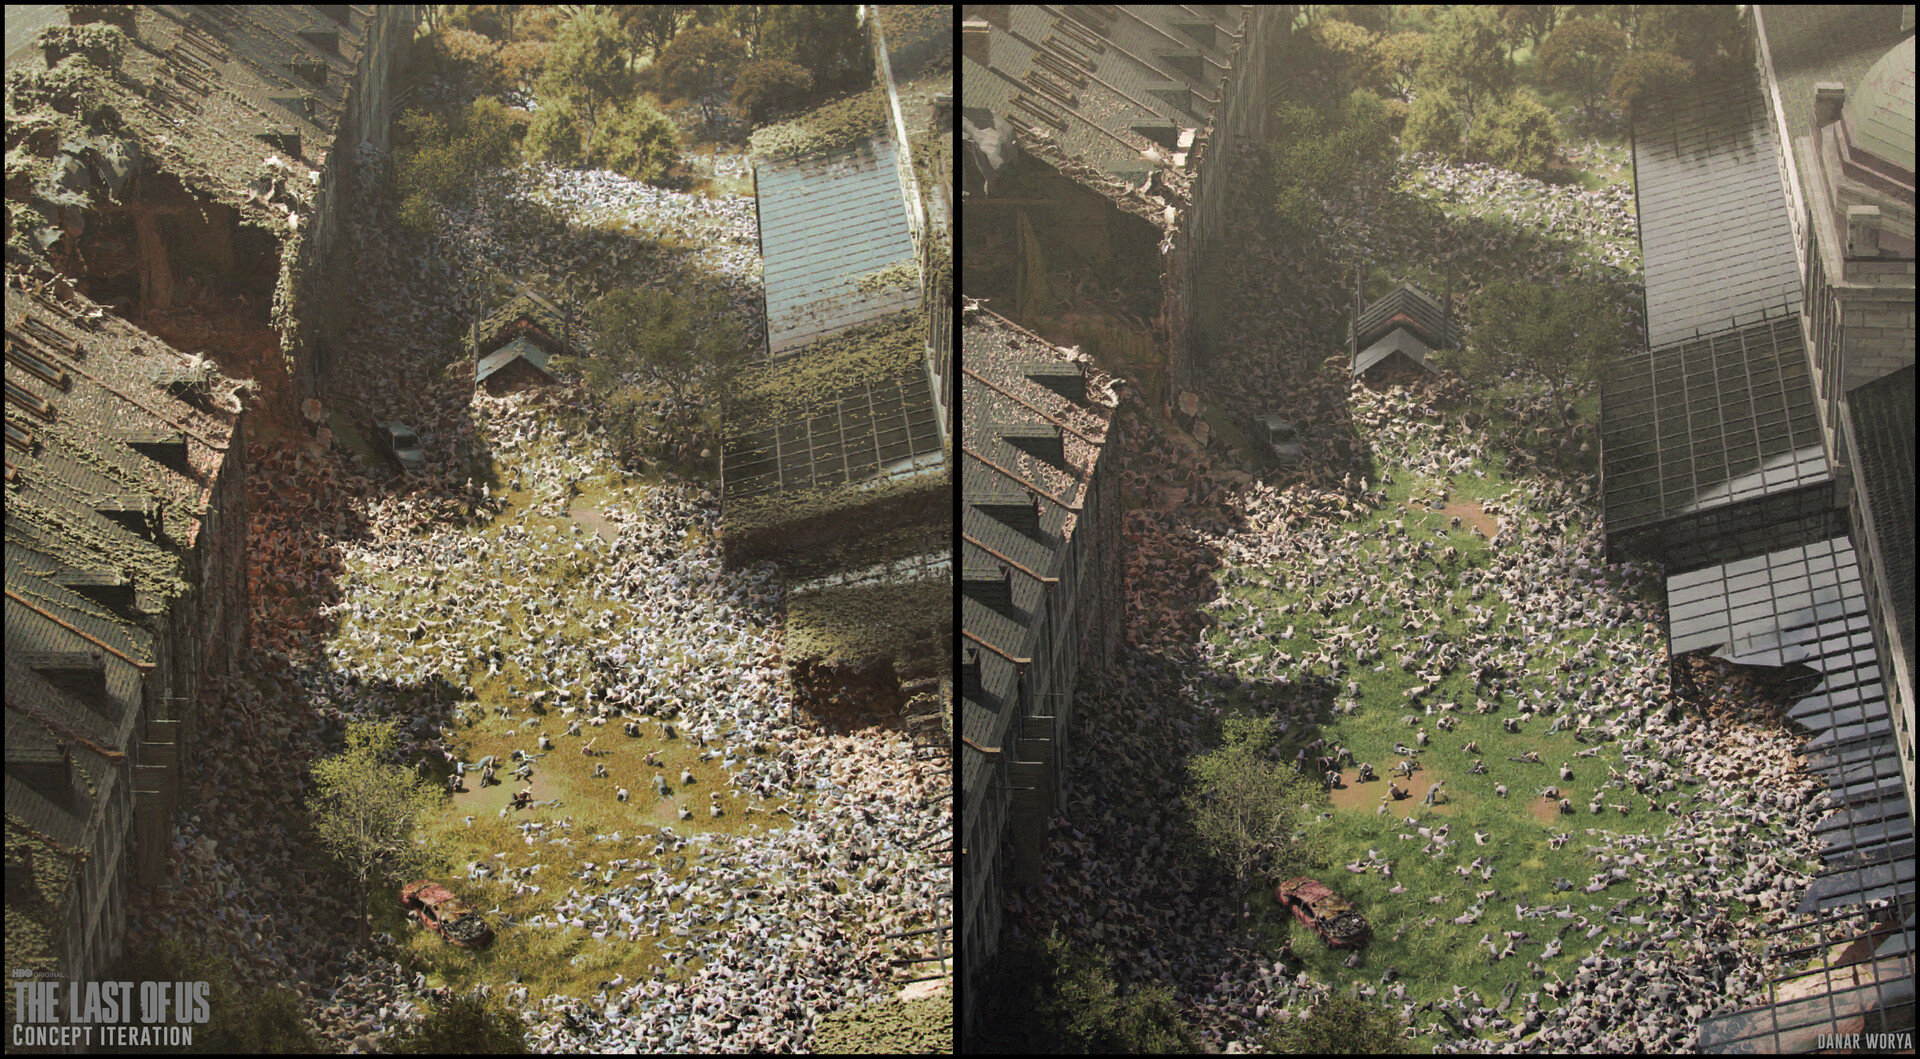 The Last Of Us Episode 2 BTS Photo Showcases Apocalyptic Set Design